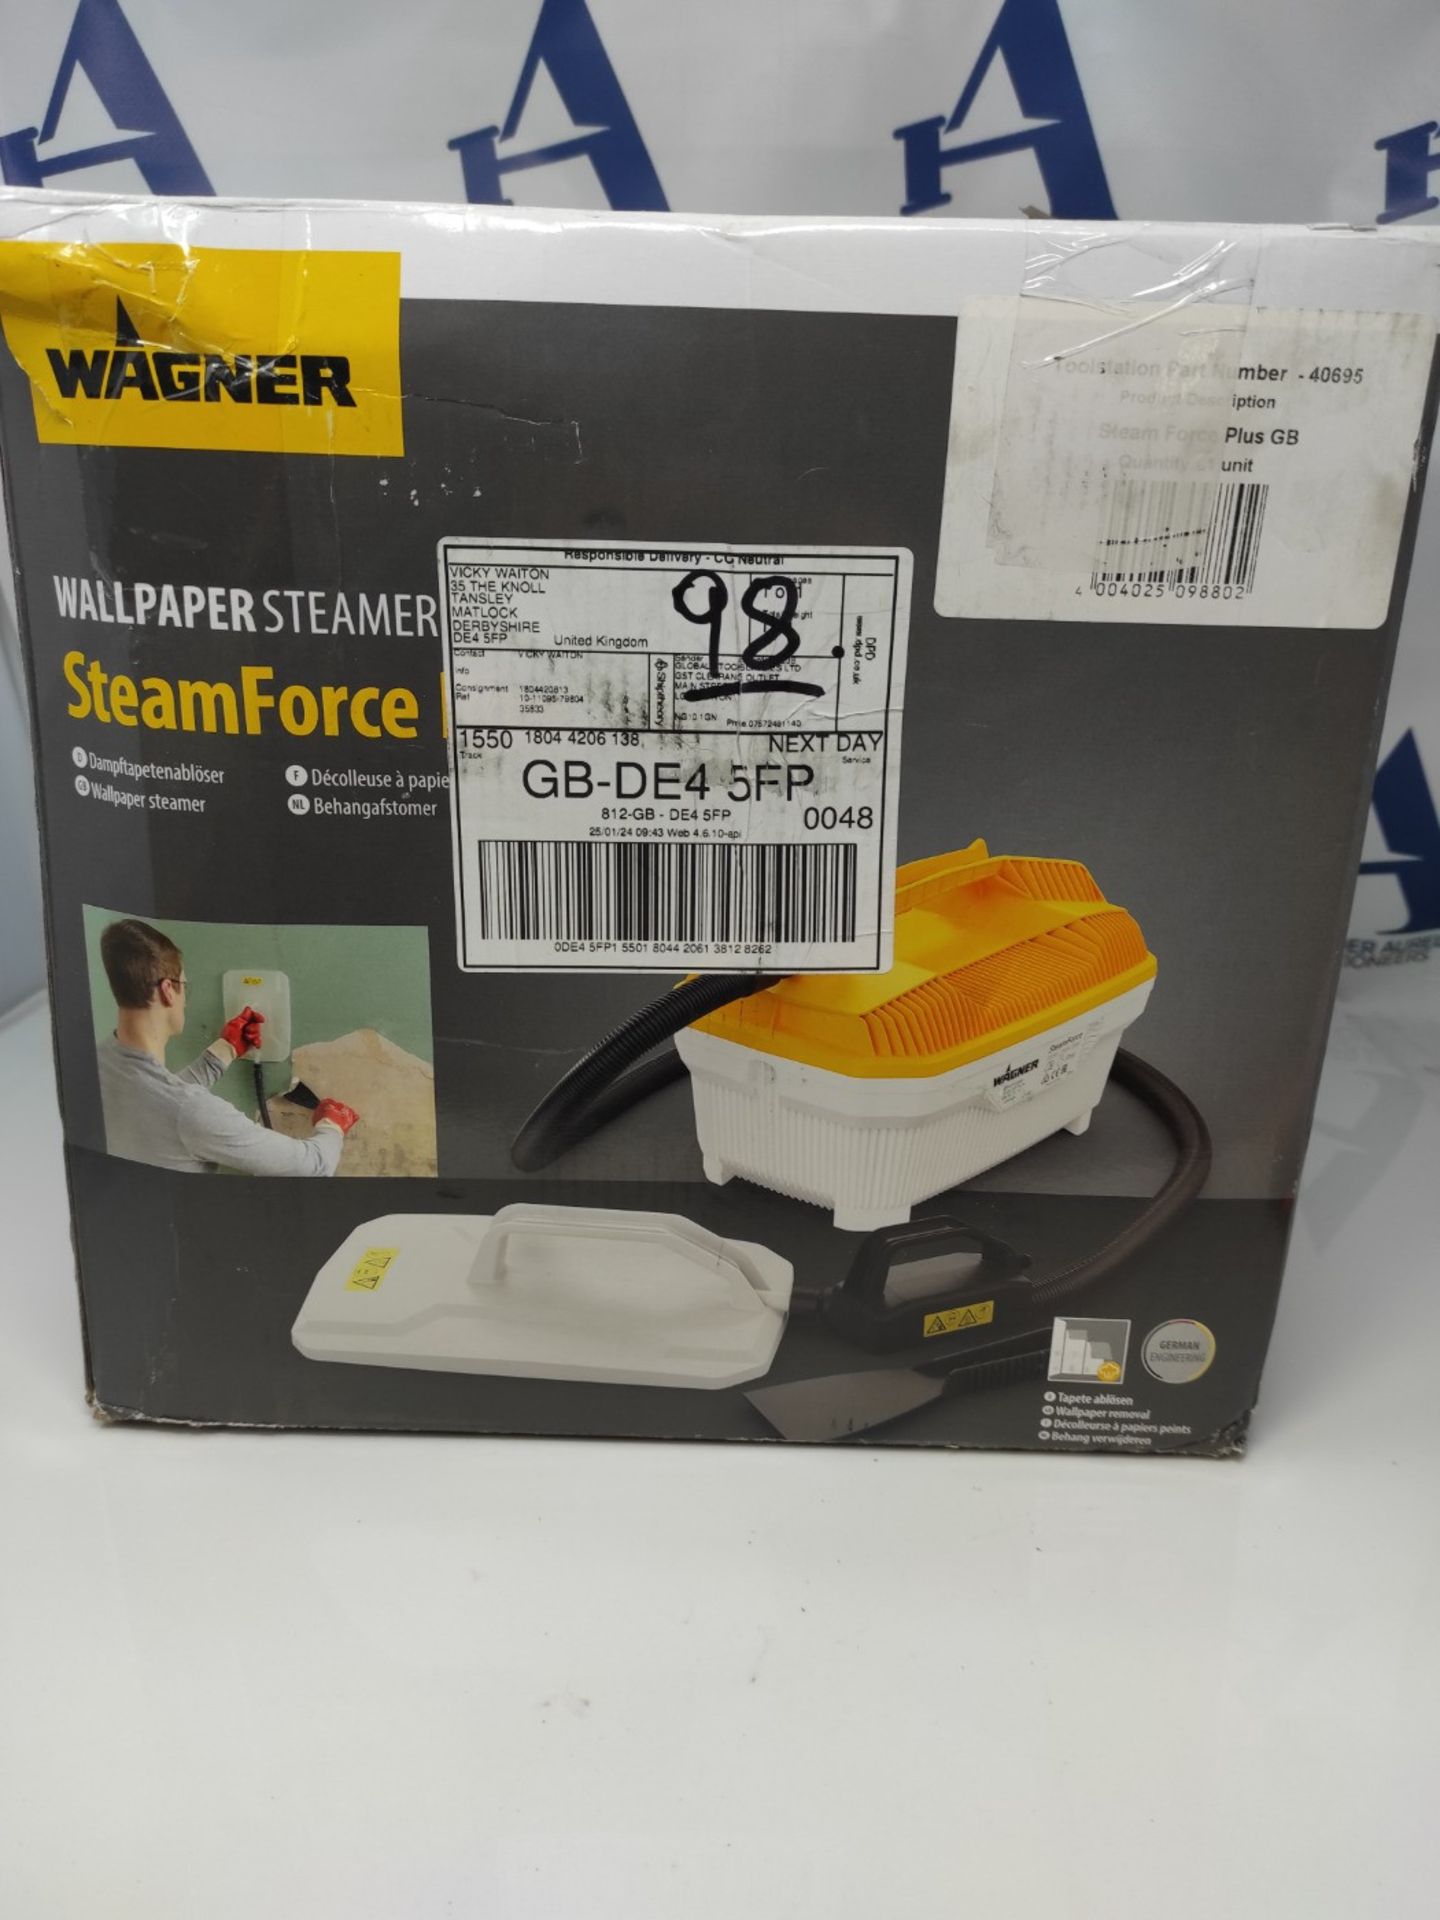 WAGNER Steam Wallpaper Stripper SteamForce, 4 l capacity, steaming time max. 70 min, 3 - Bild 2 aus 3